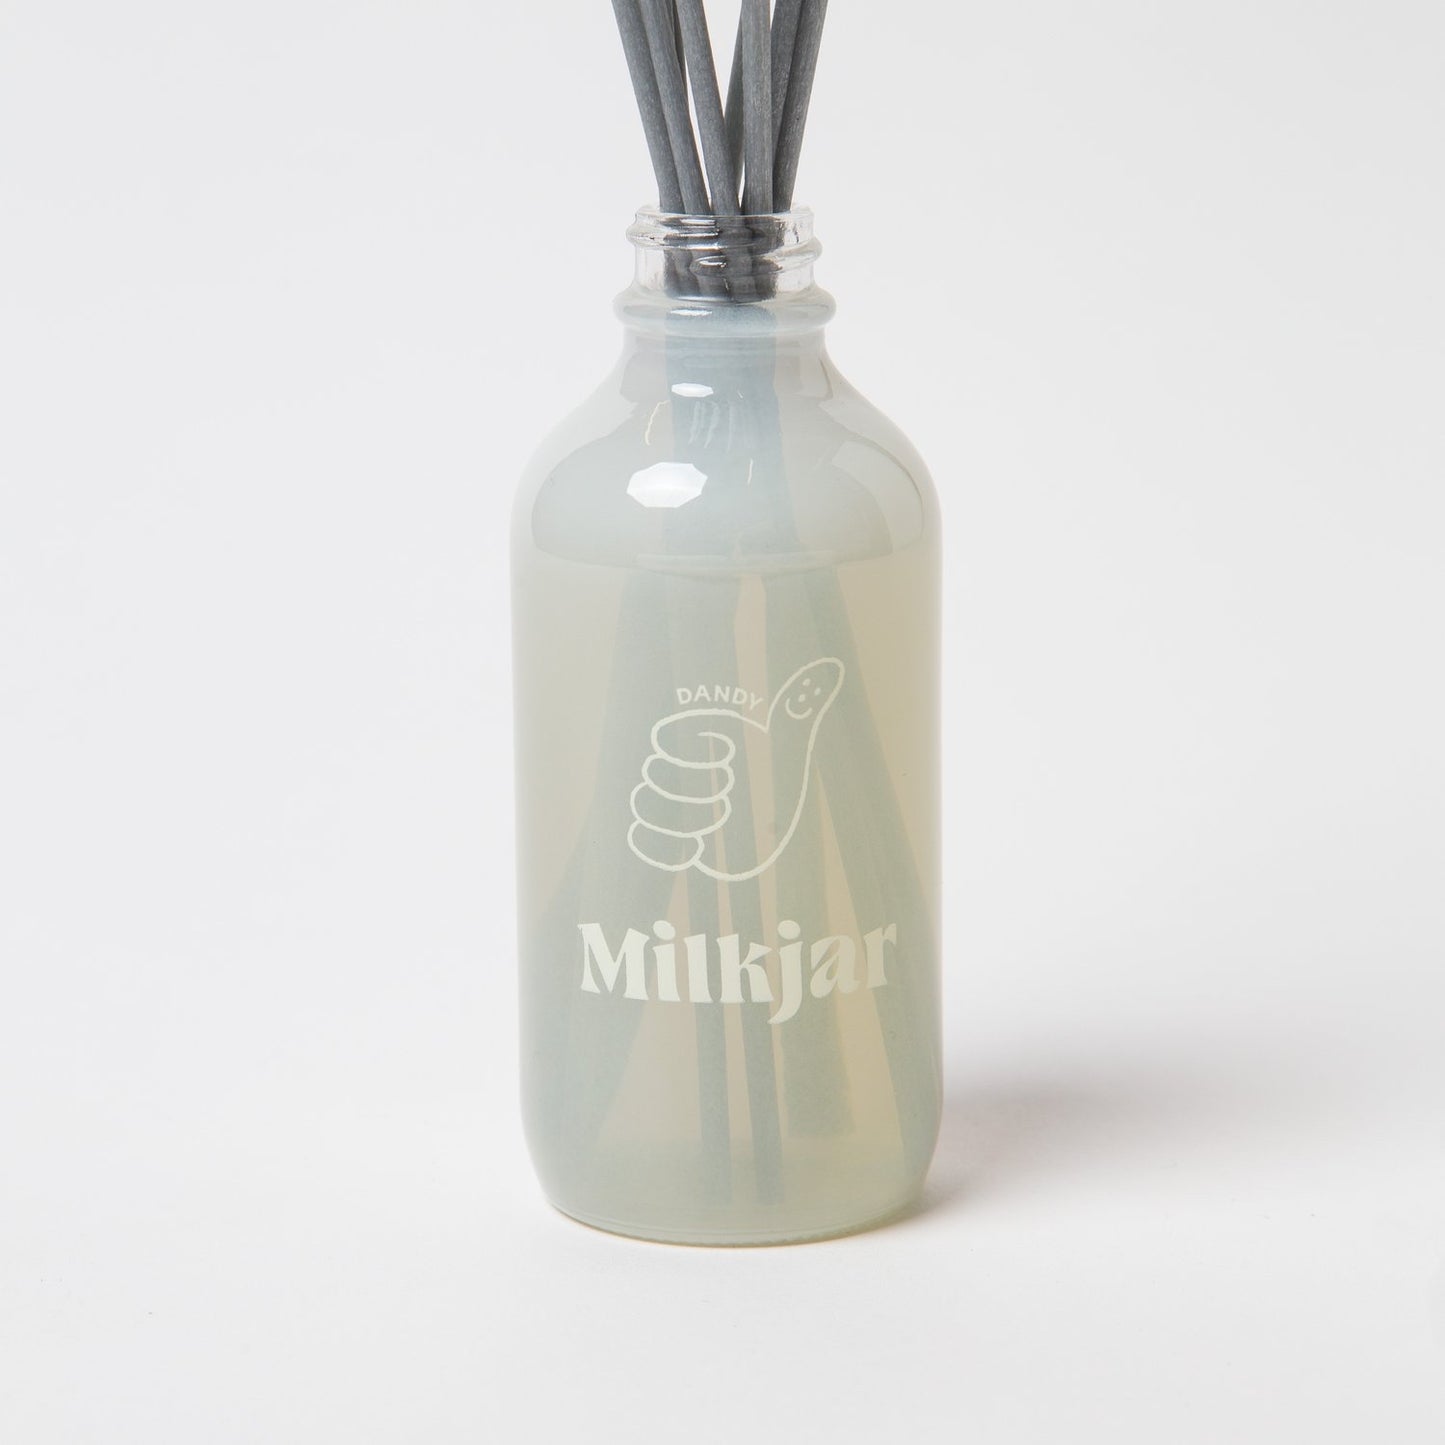 Milk Jar Candle Co / Dandy Diffuser NEW 4 OZ